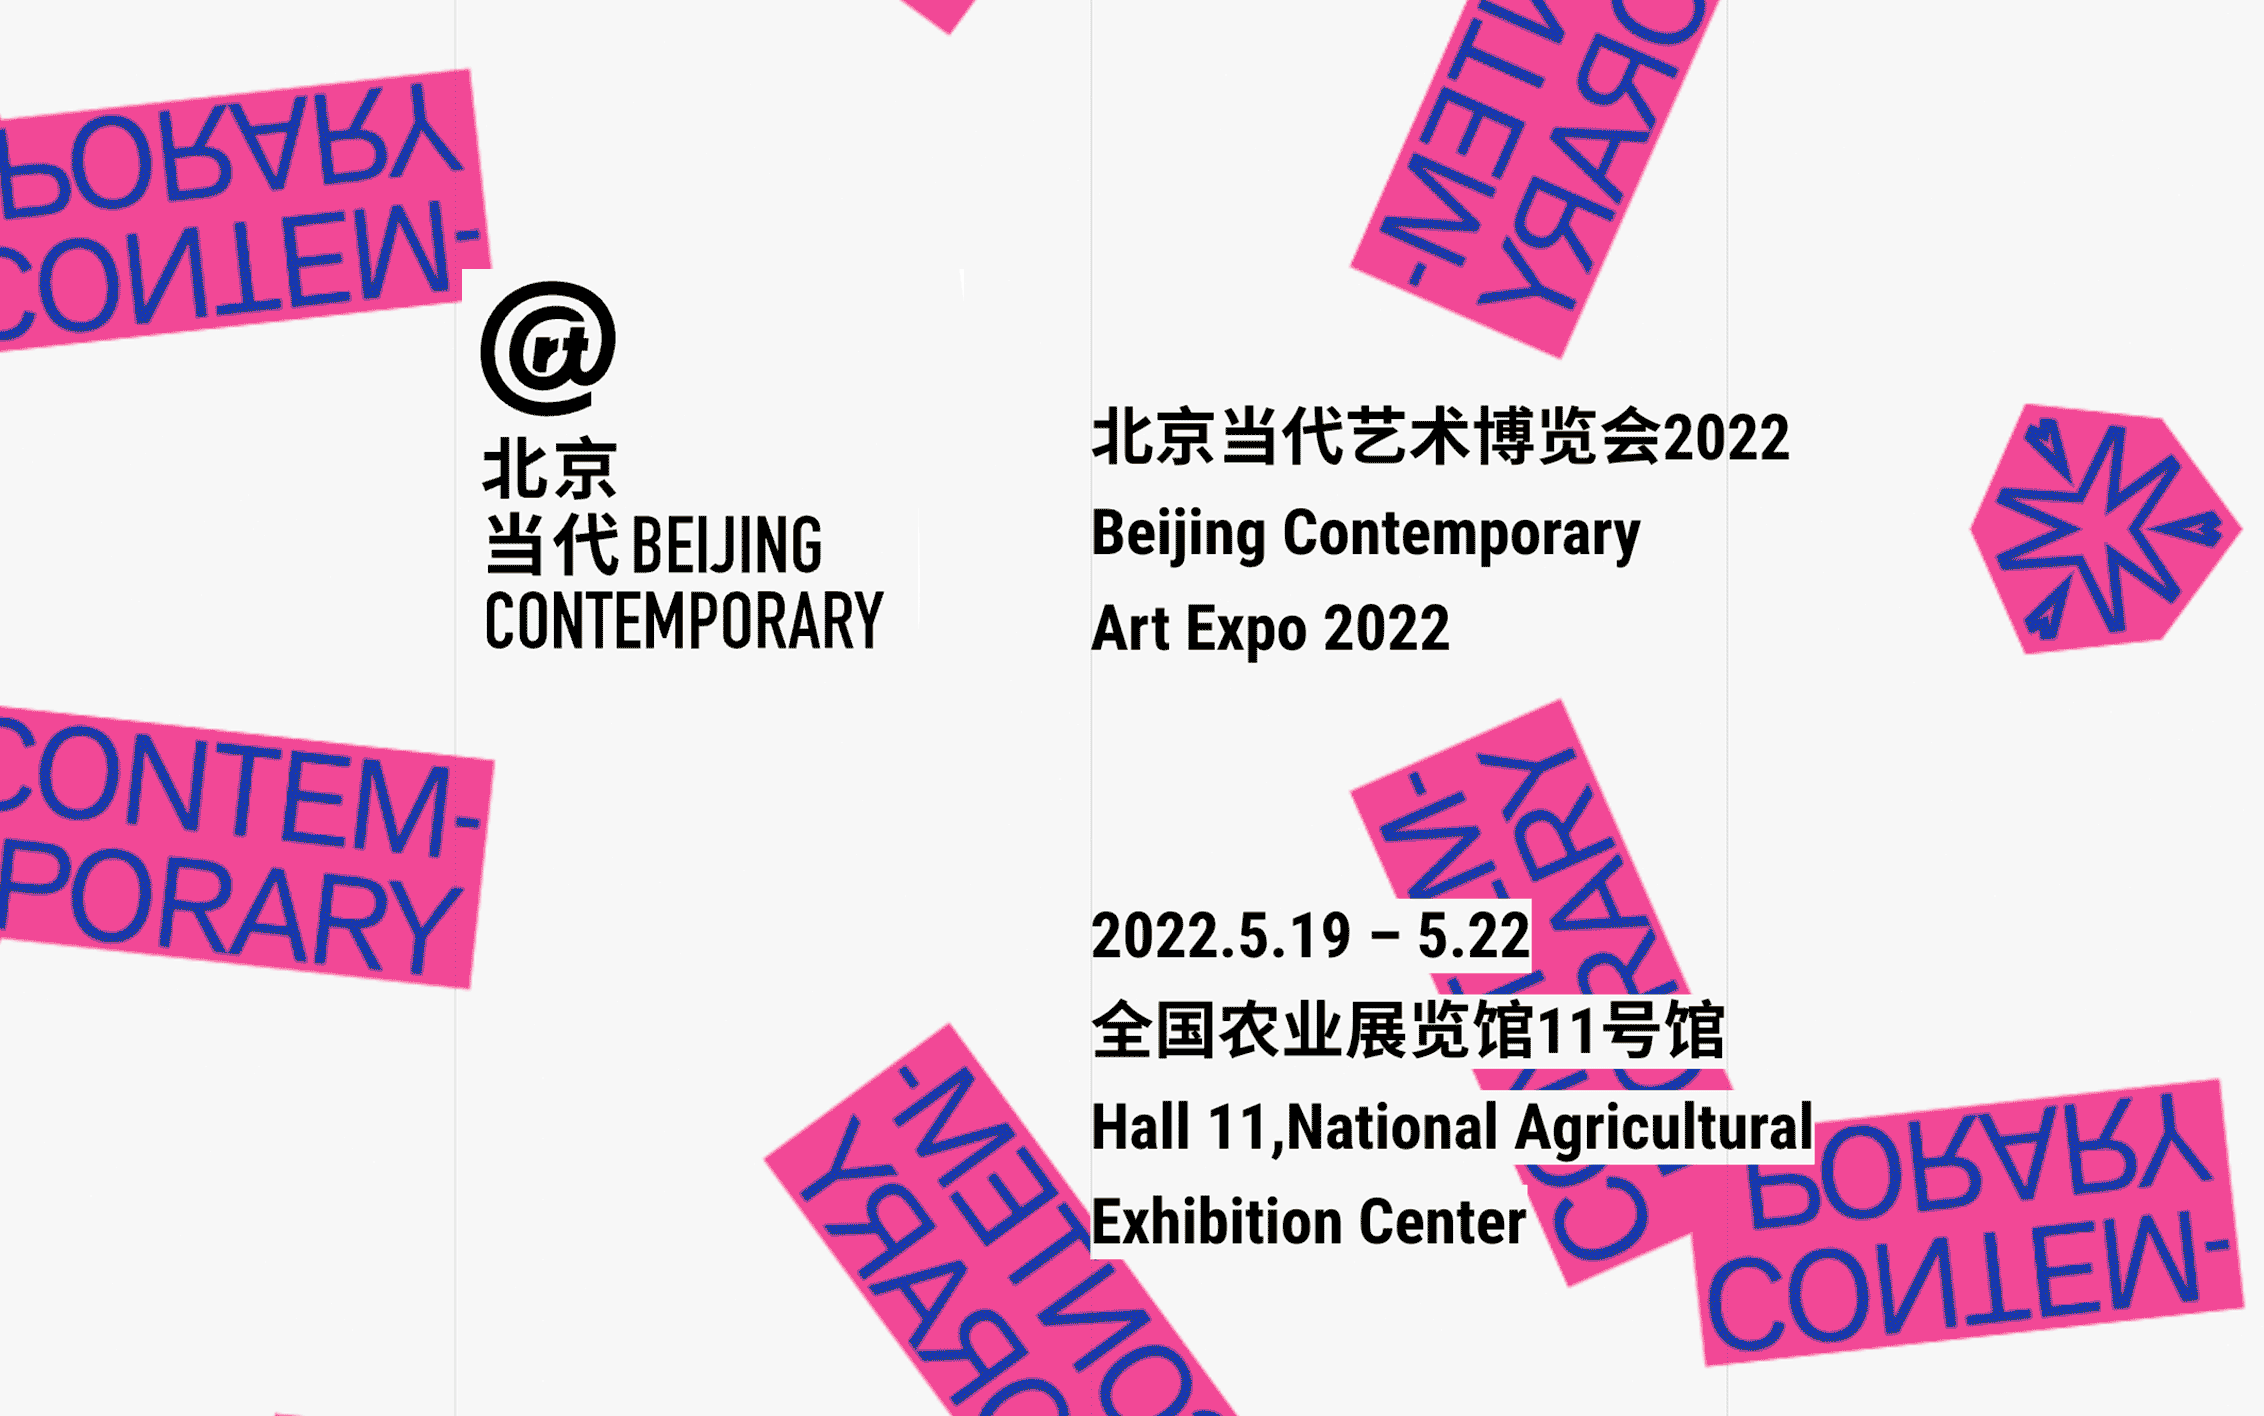 Contemporary art art fair, Beijing Contemporary Art Expo 2022 at White Space, Caochangdi, China